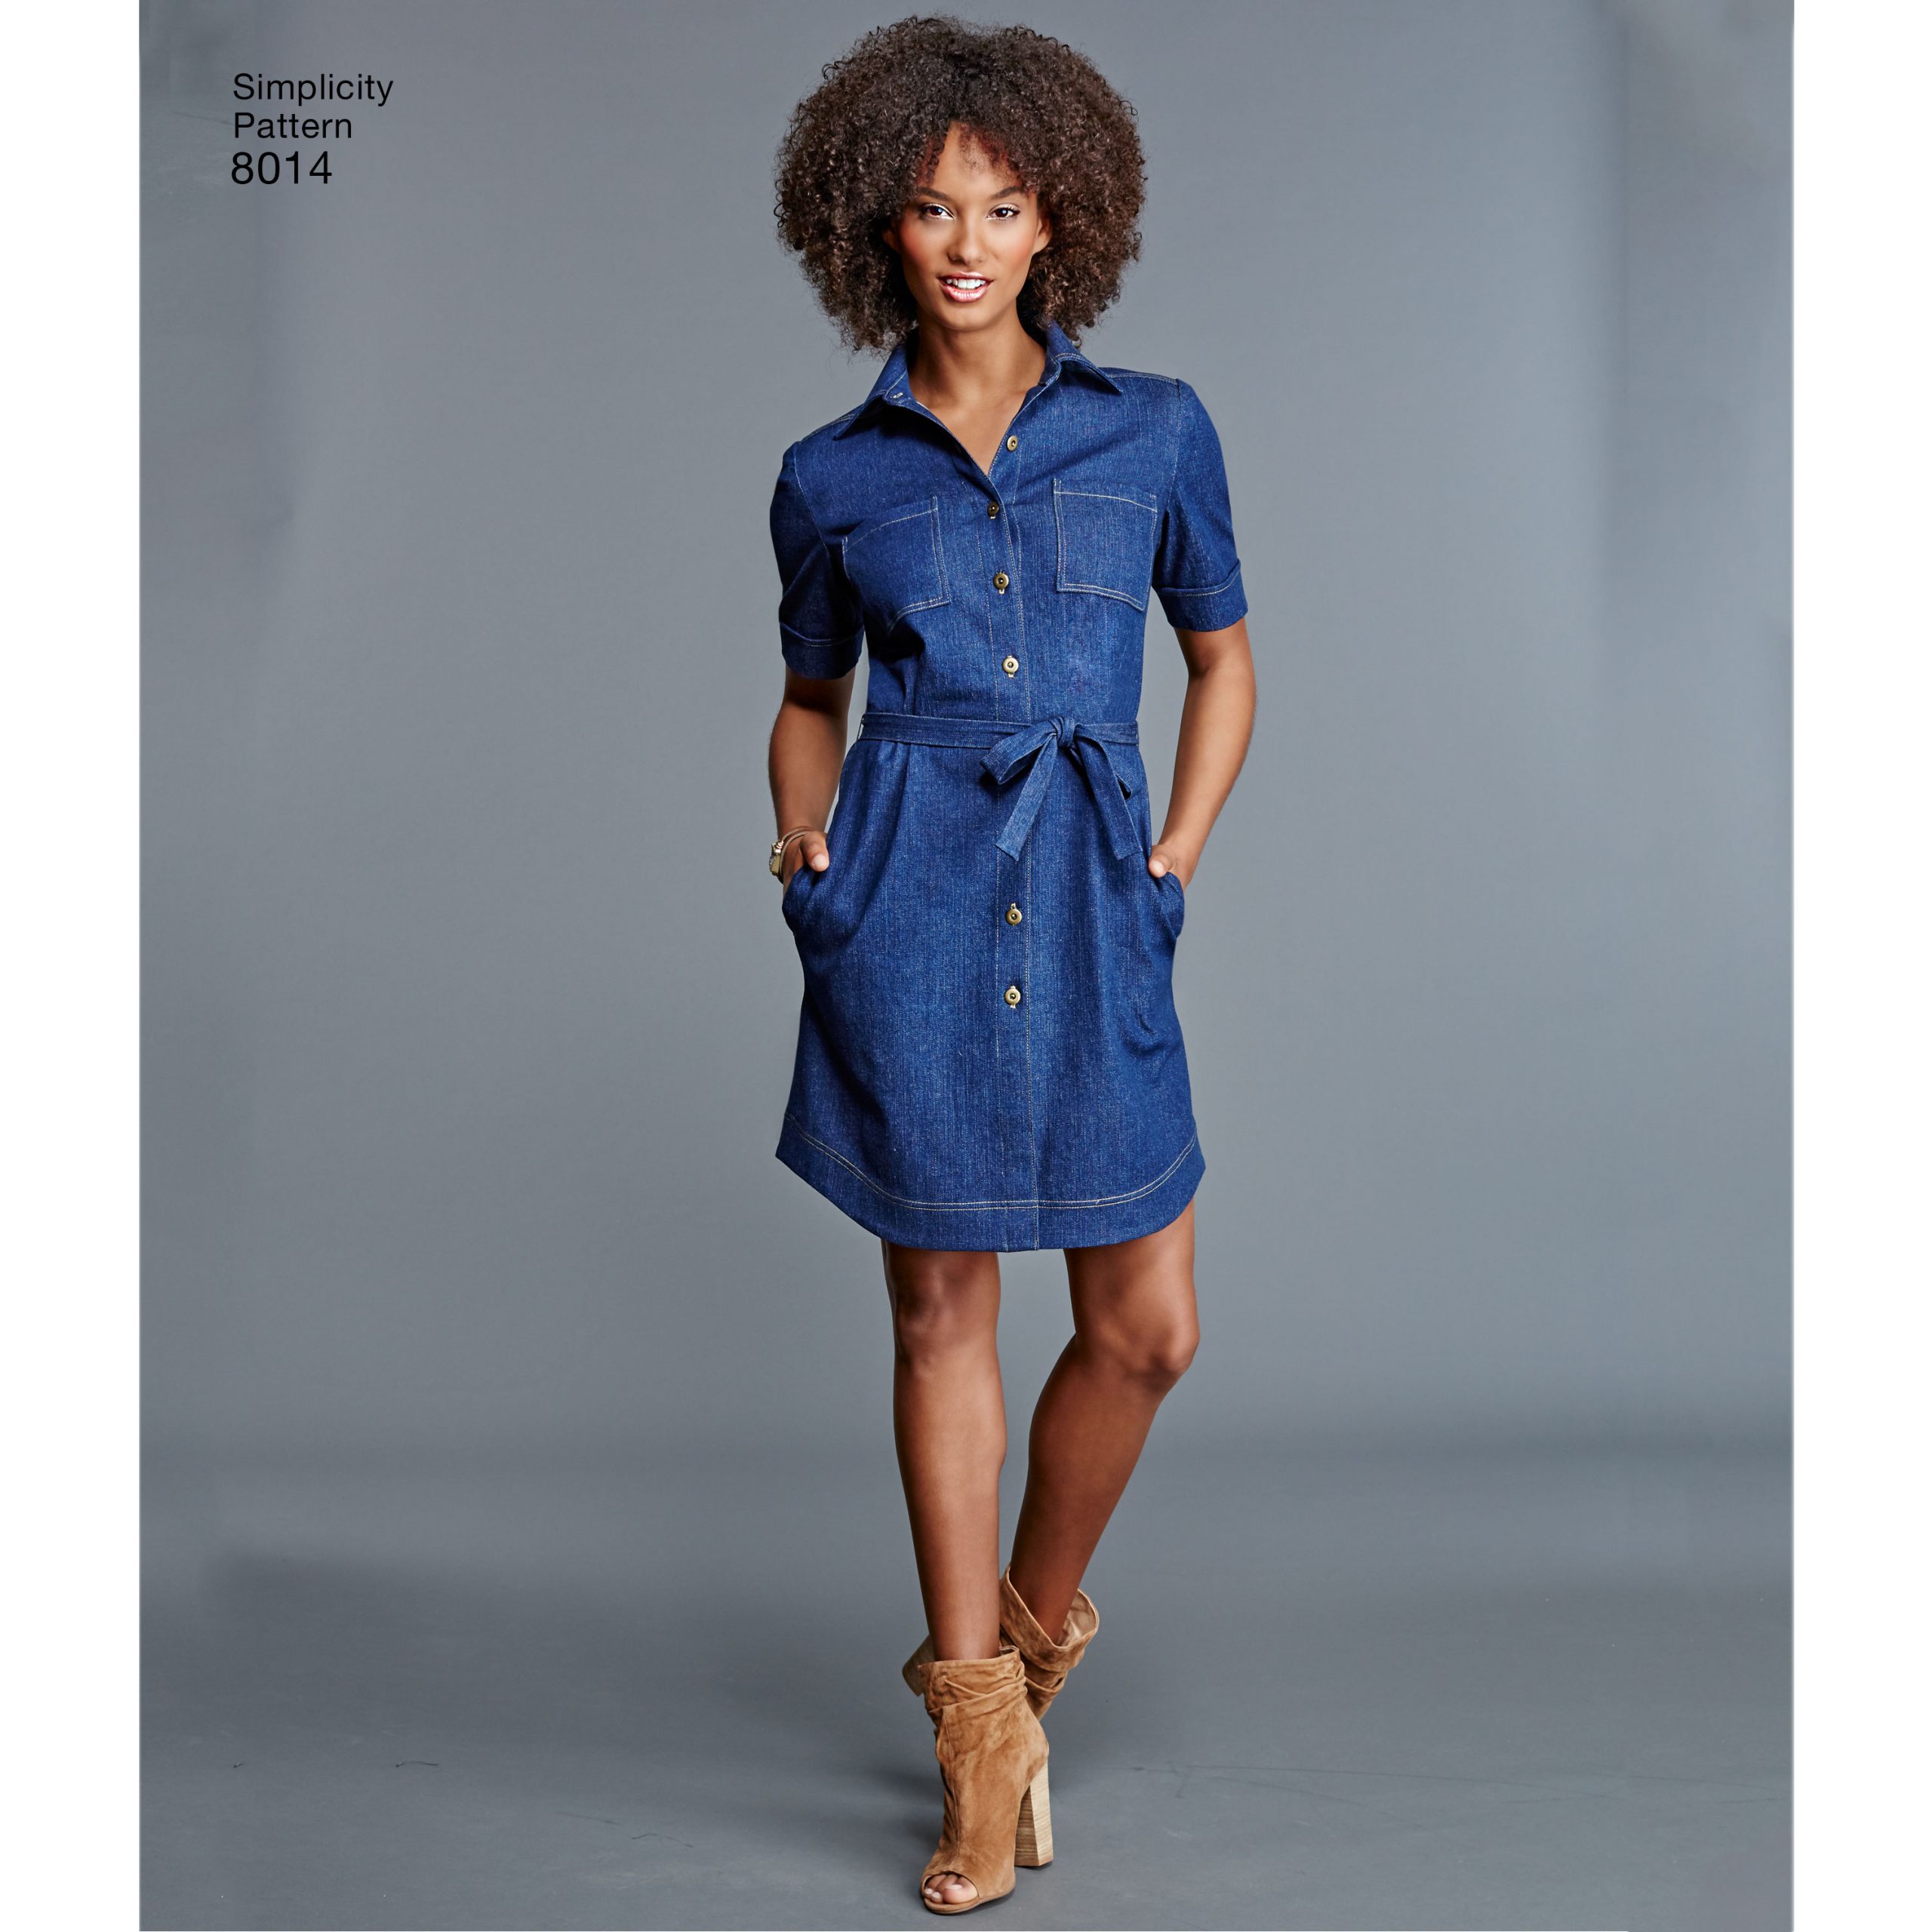 Bulk Buy China Wholesale Long Denim Shirtwaist Dress Embroidered Skirt  Classic Denim Dress $4.99 from Humanxm(Quanzhou) Shoes and Garments Corp |  Globalsources.com